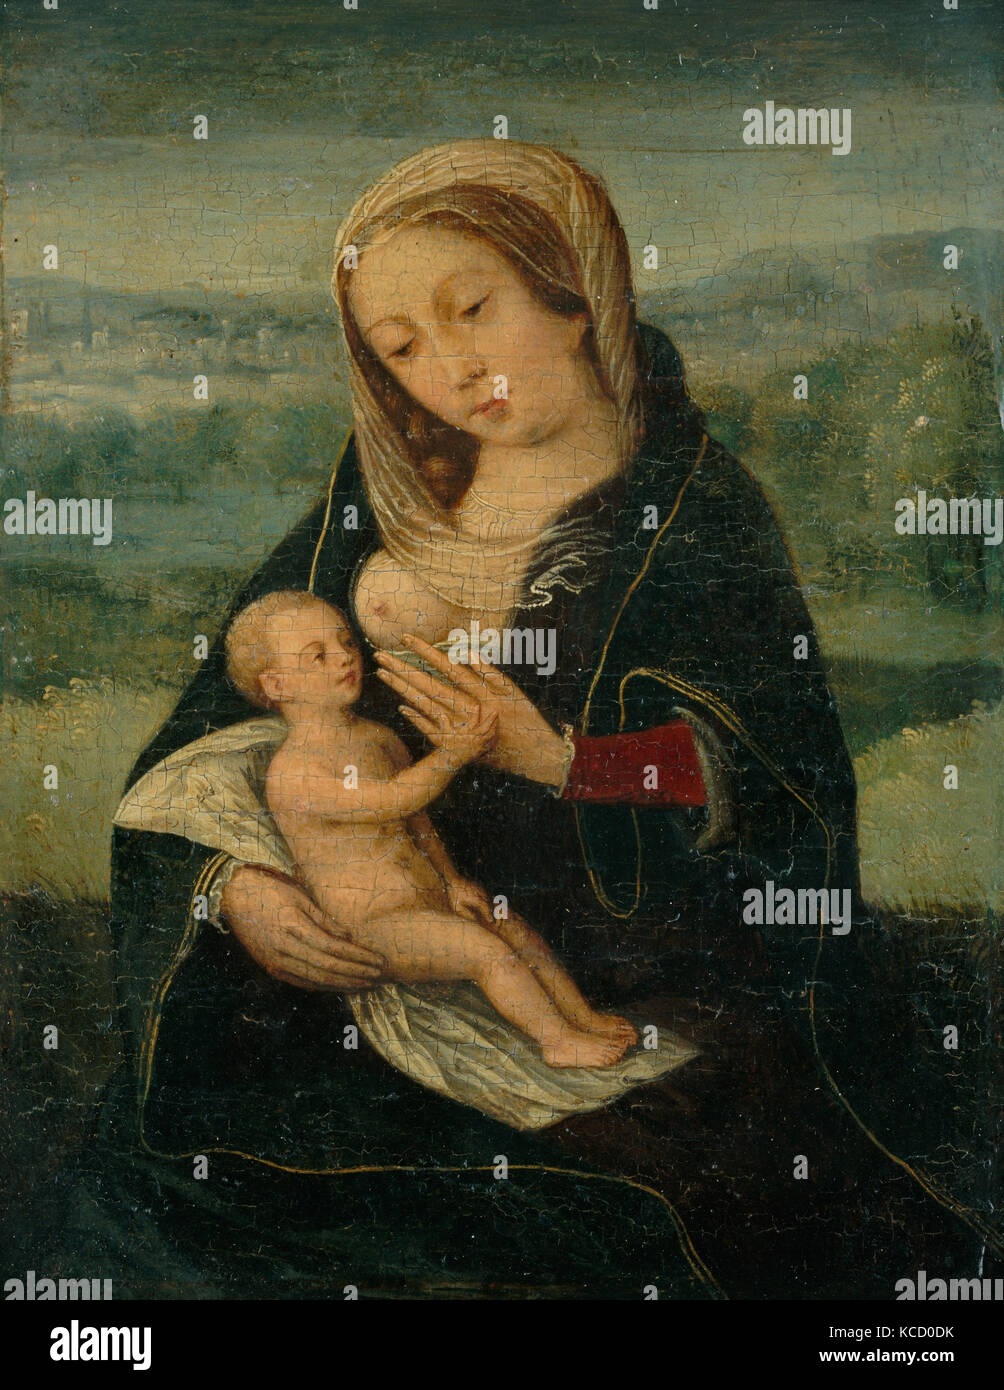 Virgin and Child, Netherlandish, second quarter 16th century Stock Photo